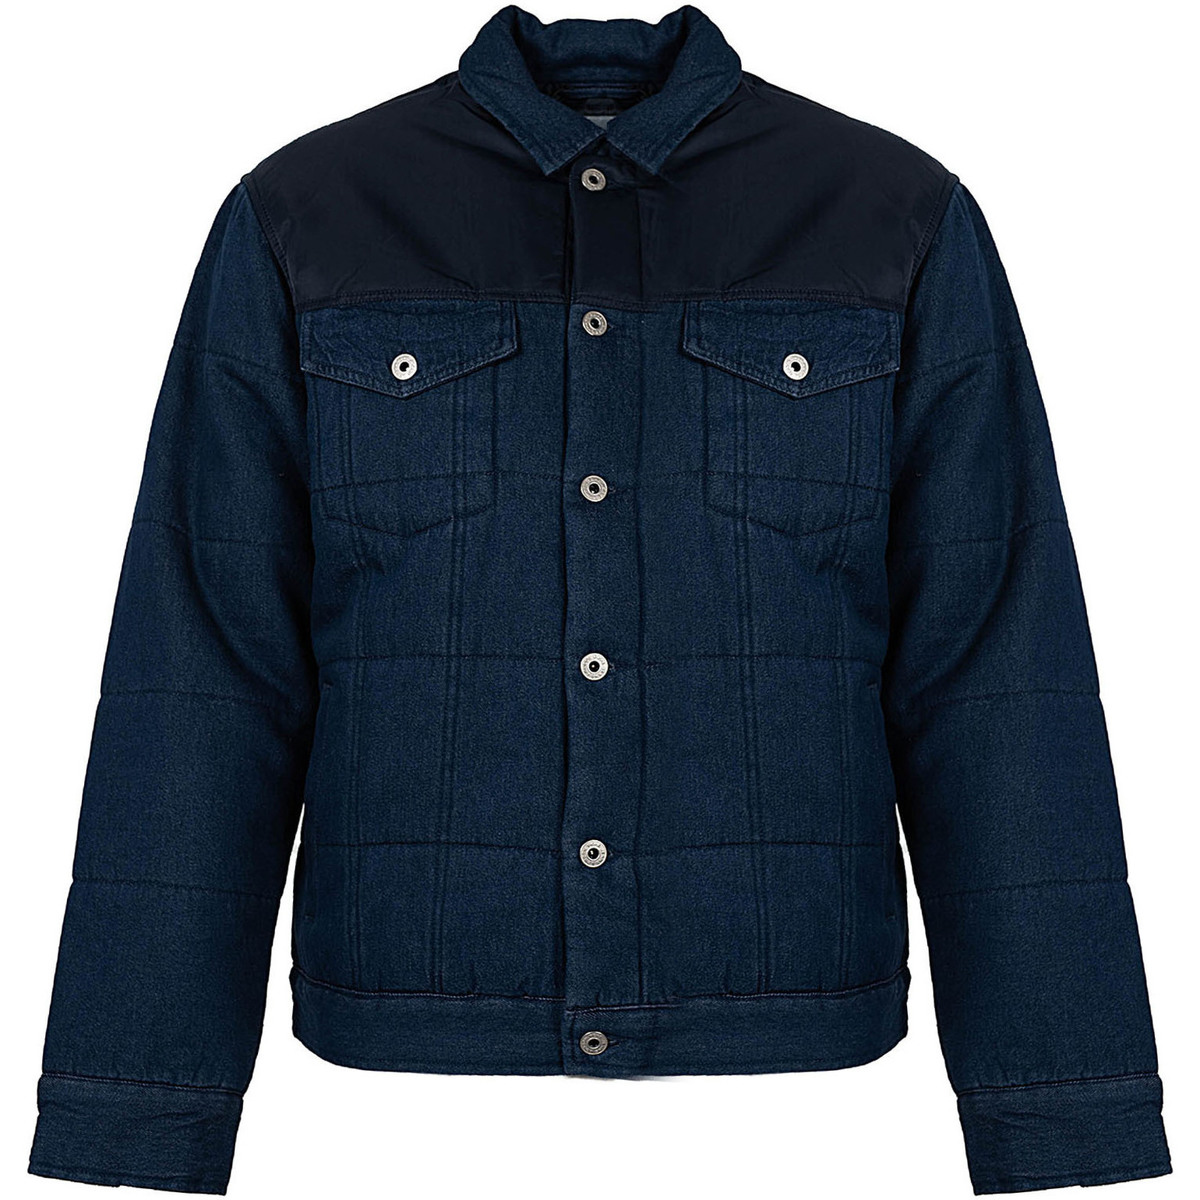 Textiel Heren Wind jackets Pepe jeans PM402629 | Barnet Blauw